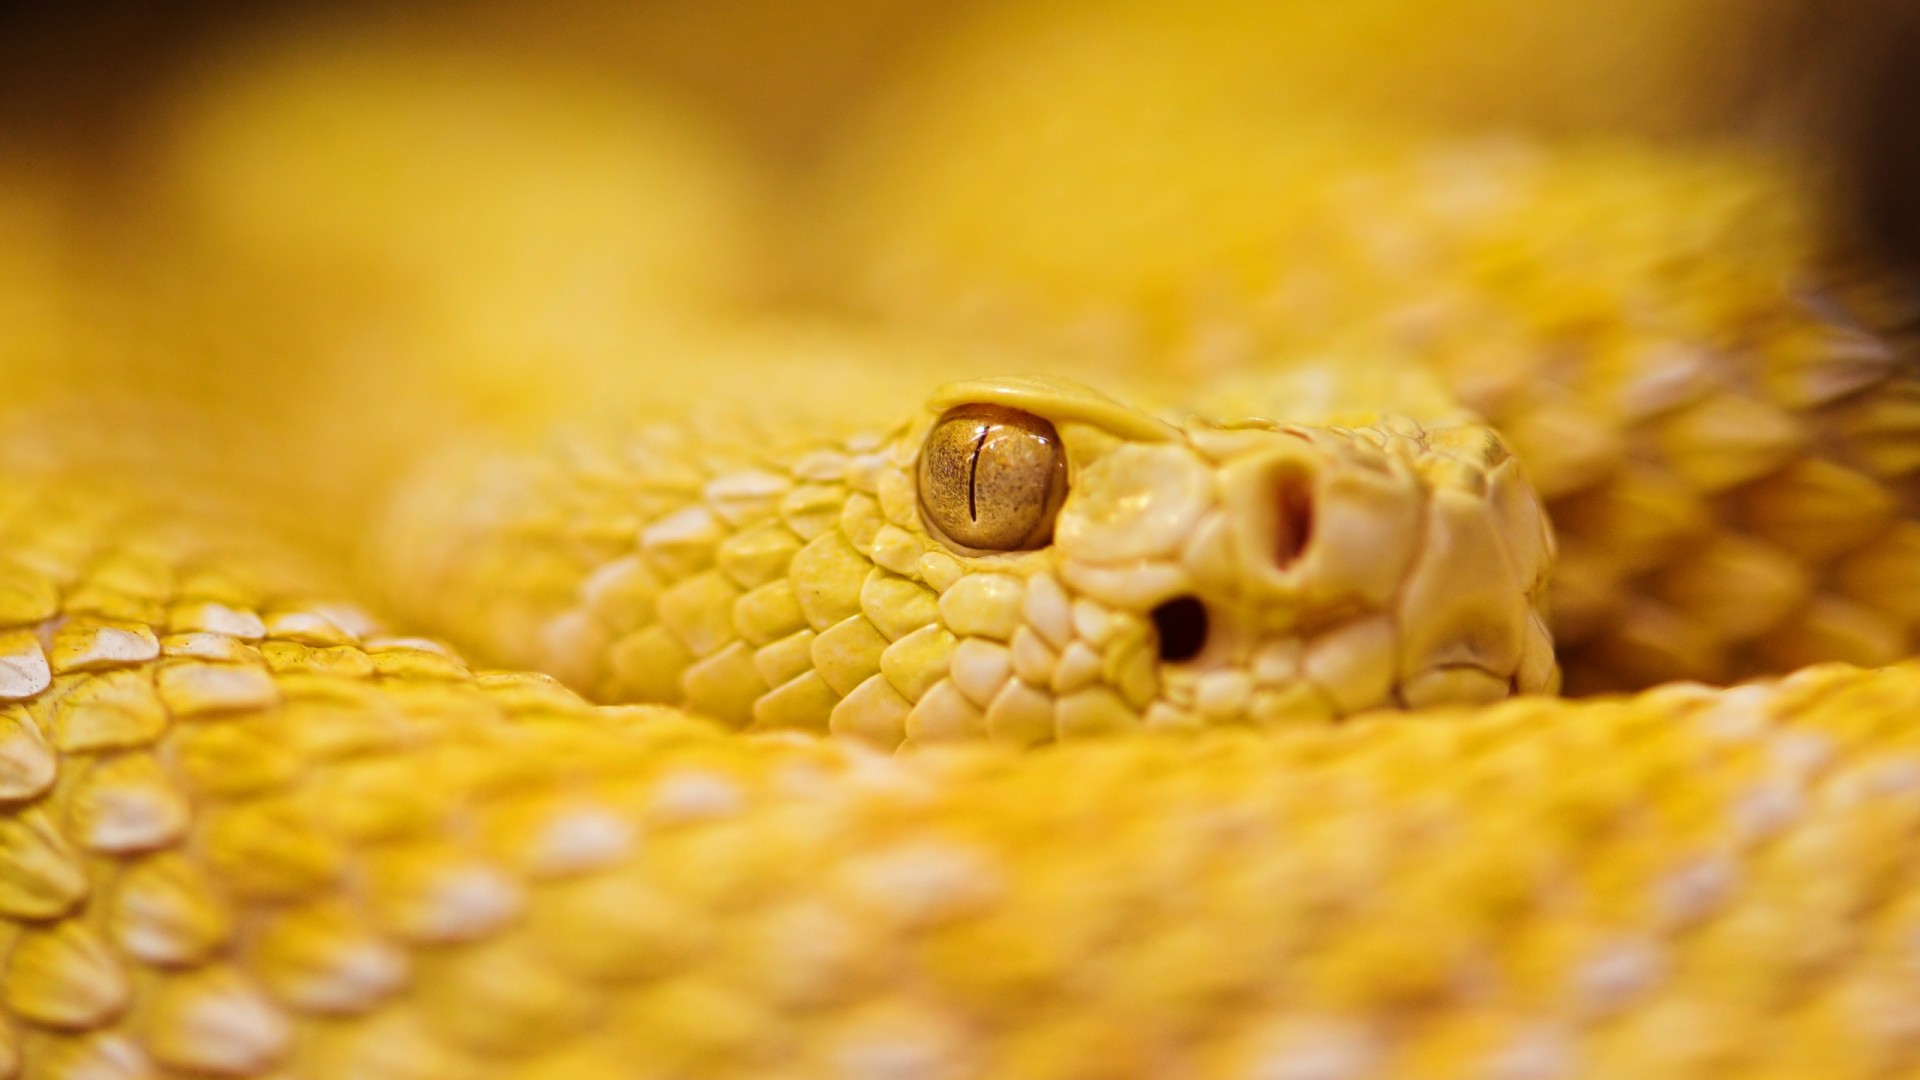 Змея, 4k, HD, альбинос, гремучая змея, желтые, желтый, глаза, рептилия, Snake, 4k, HD wallpaper, albino, rattlesnake, yellow, Eyes, reptiles (horizontal)